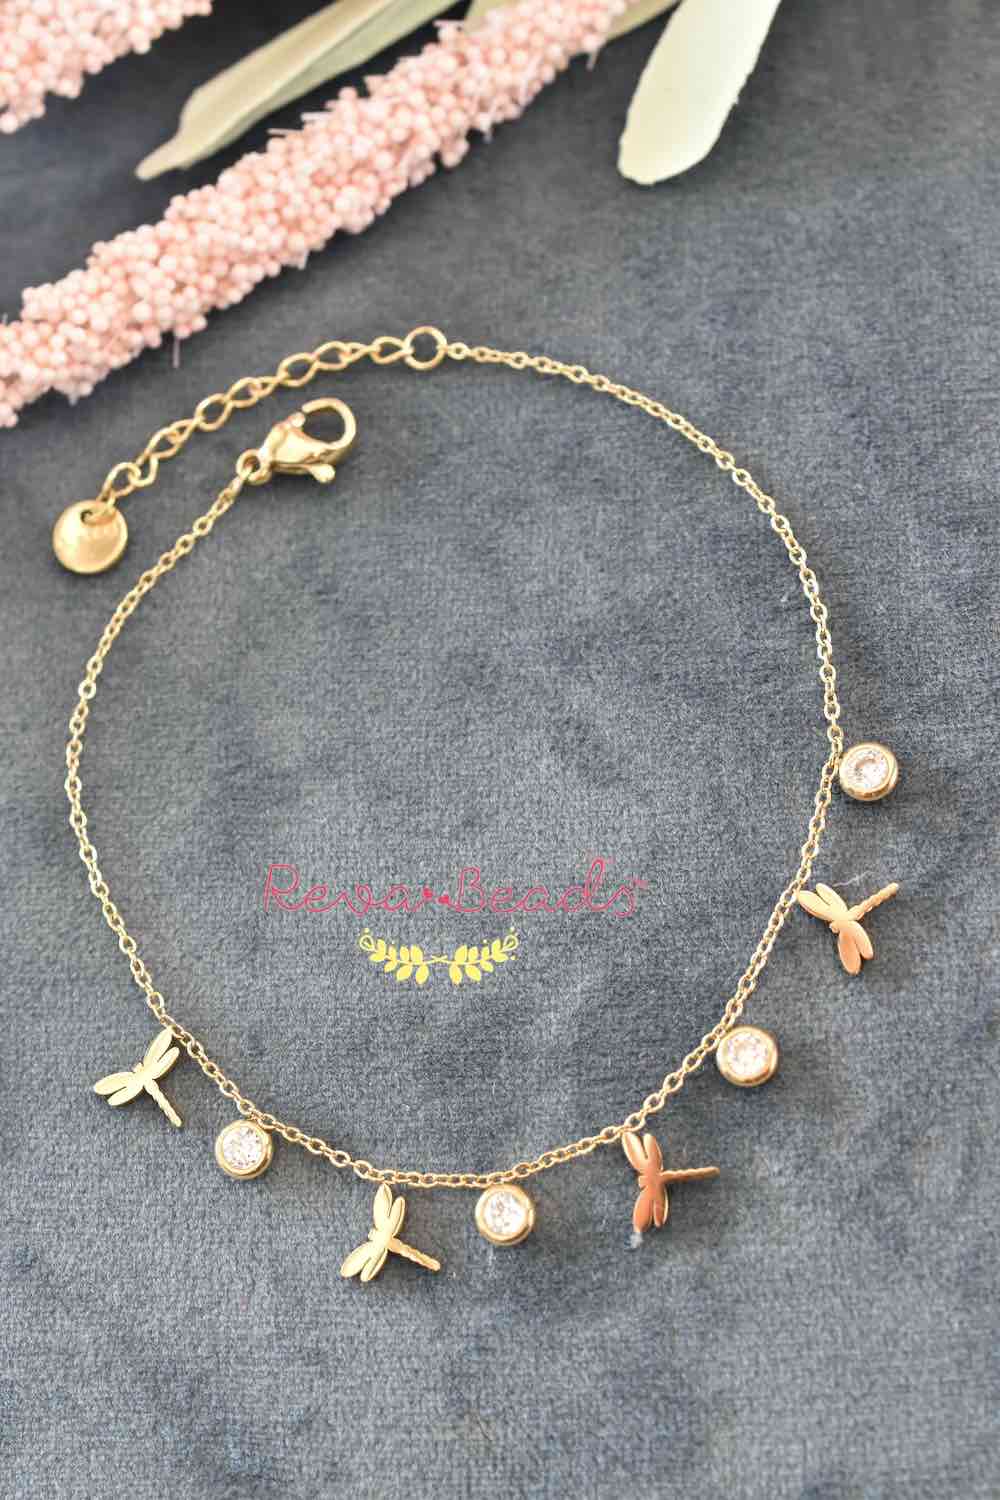 Minimalist Thin Dainty Dot Chain Bracelet-Gold, Silver, Rose Gold | eBay